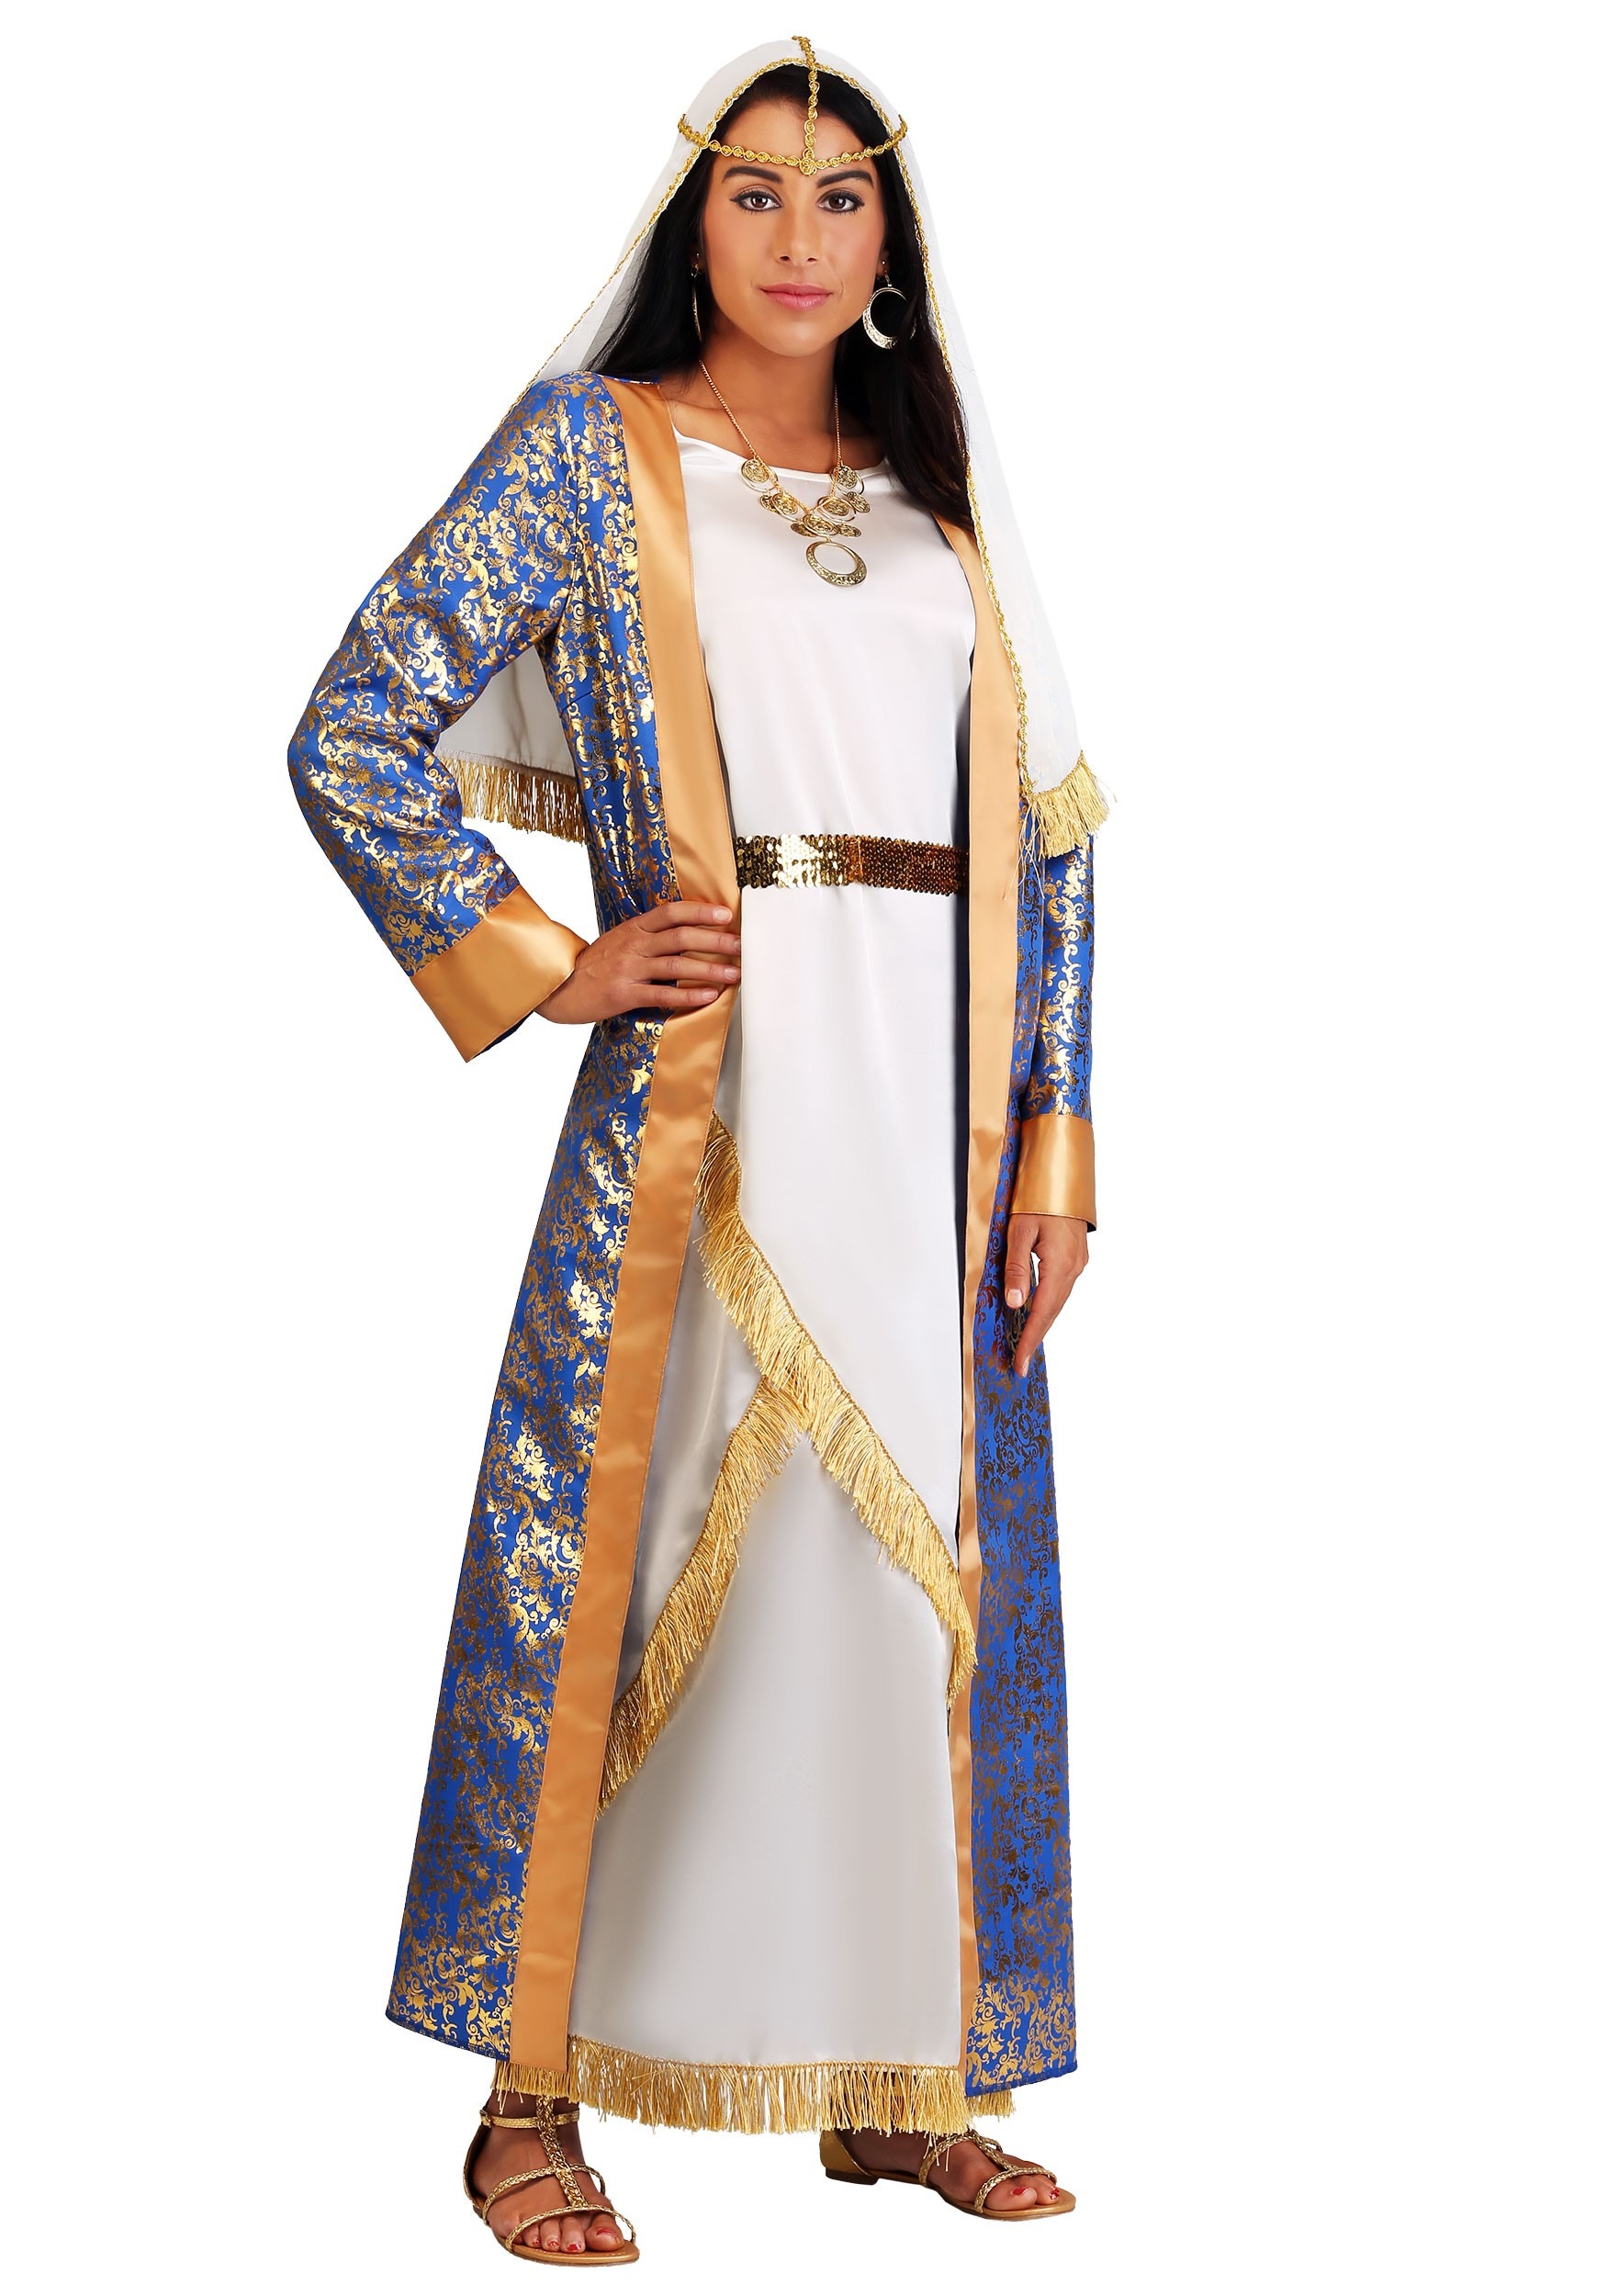 Plus Size Queen Esther Women’s Costume